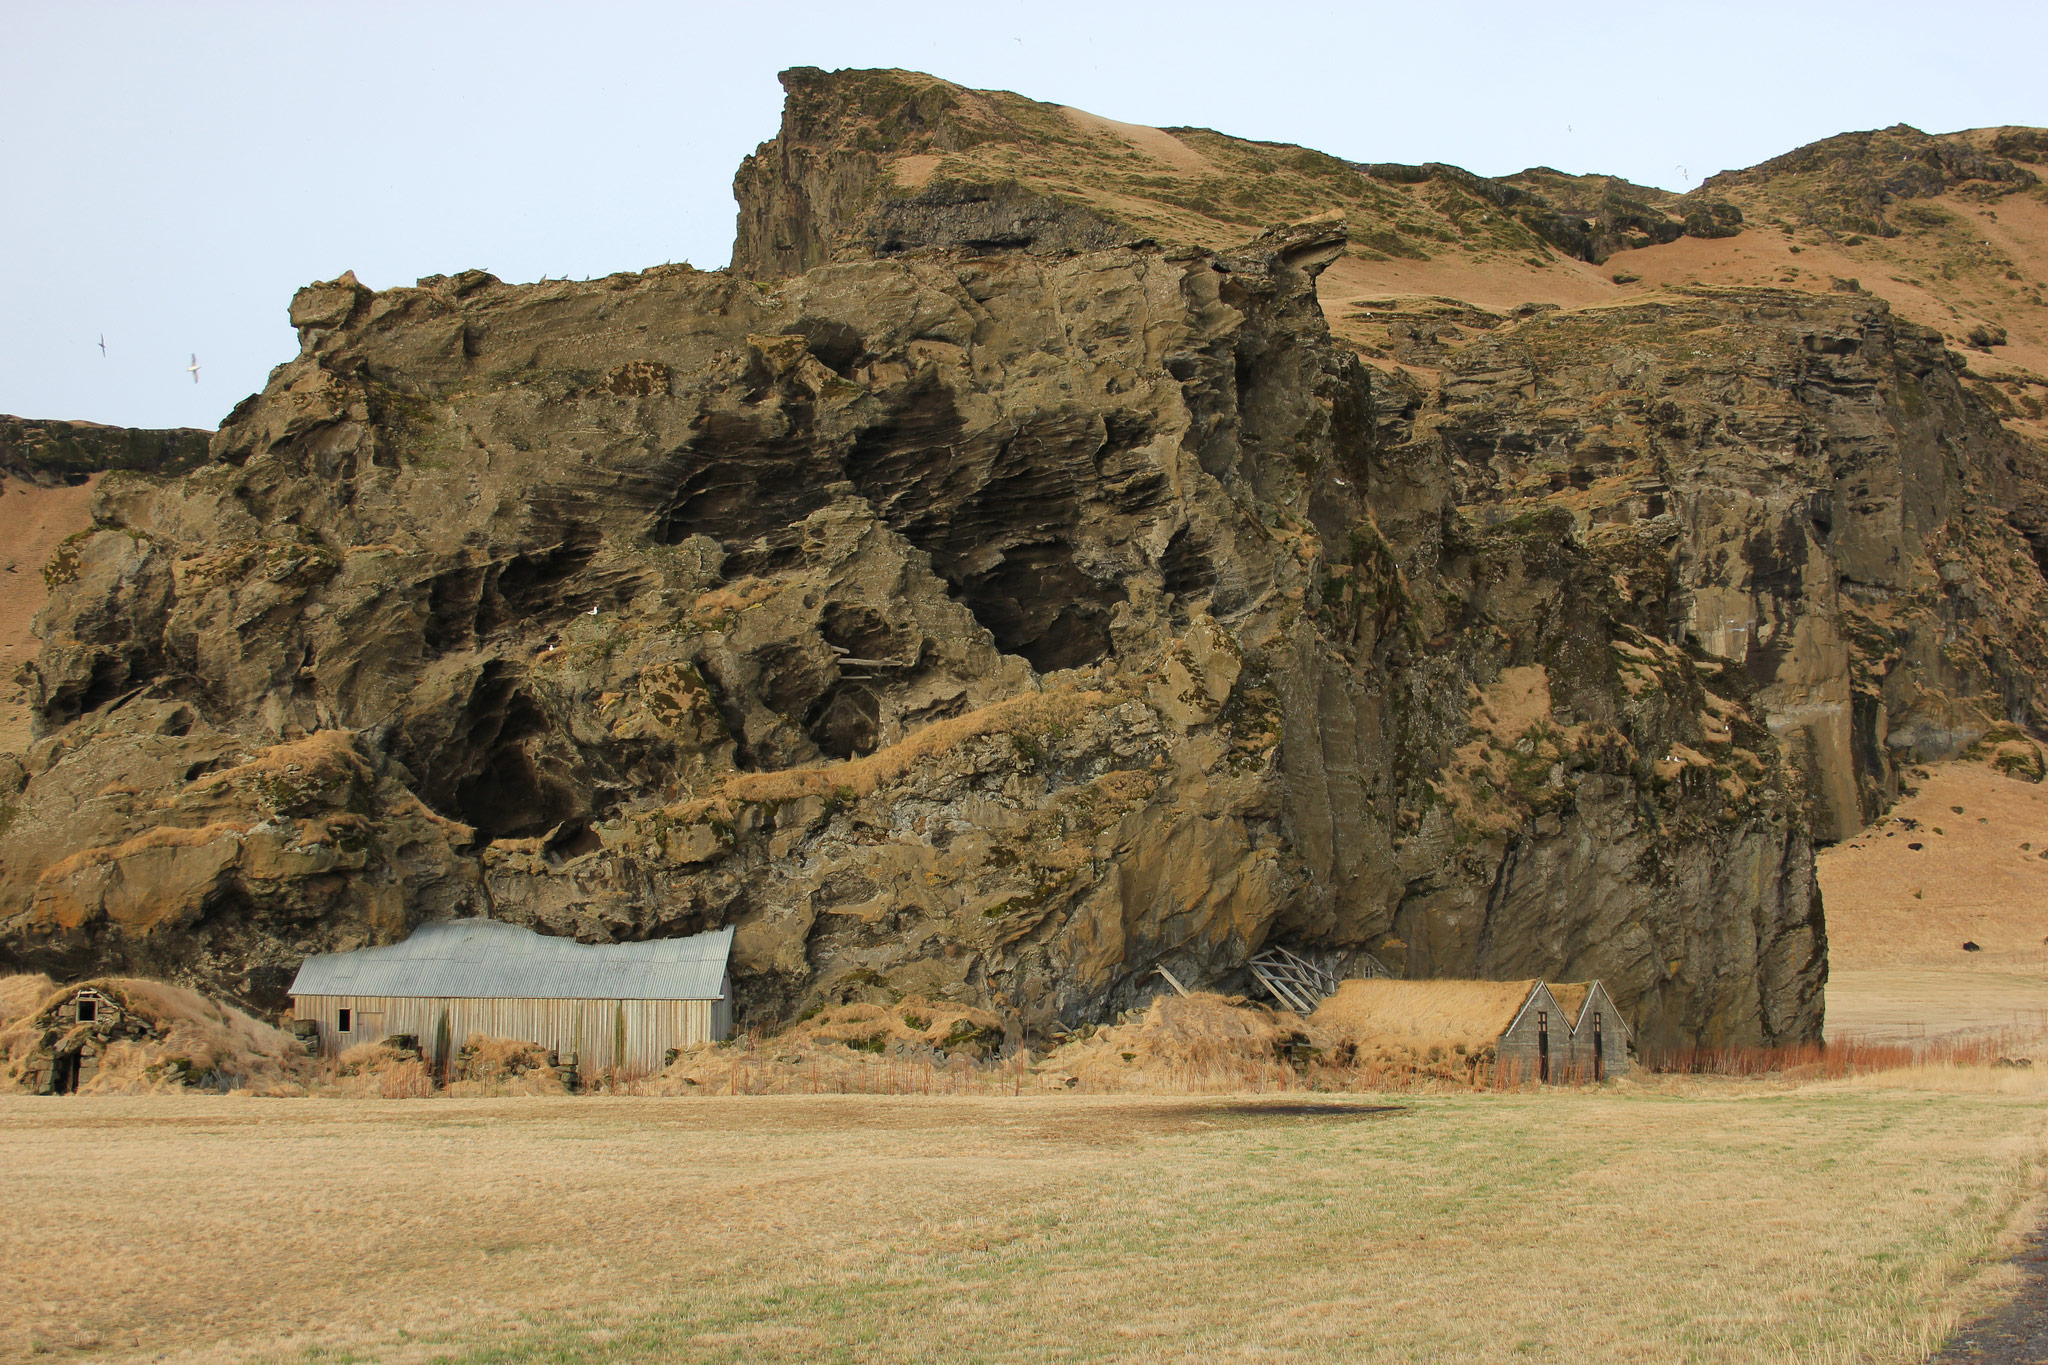 A fairy castle. Many Icelanders believe that Huldufólk or hidden people (elves) live in rocks and cliffs like these